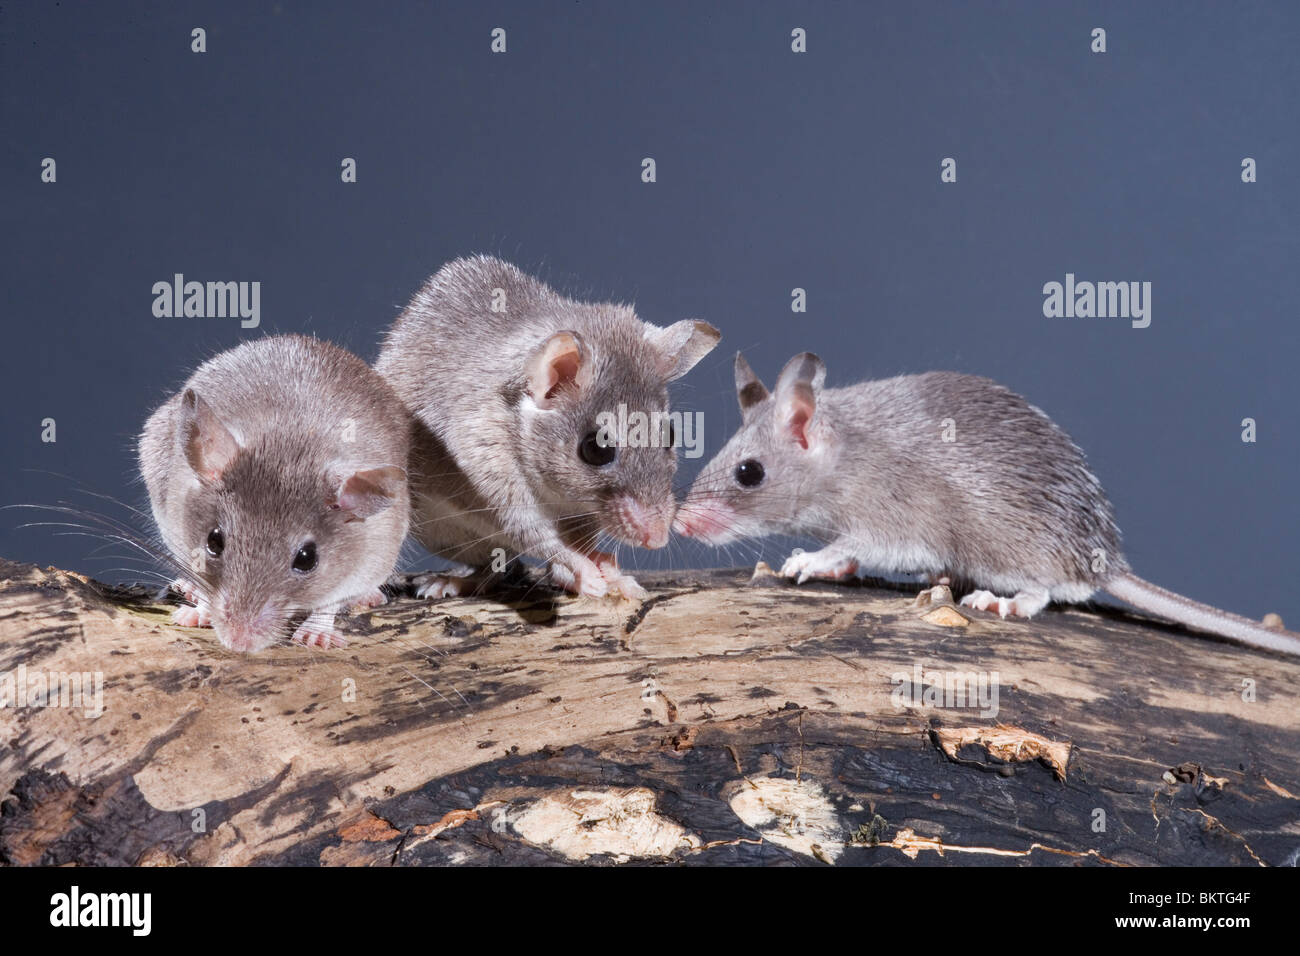 Spinosa egiziano topi (Acomys cahirinus cahirinus). Centro Adulti, immaturo su entrambi i lati. Foto Stock